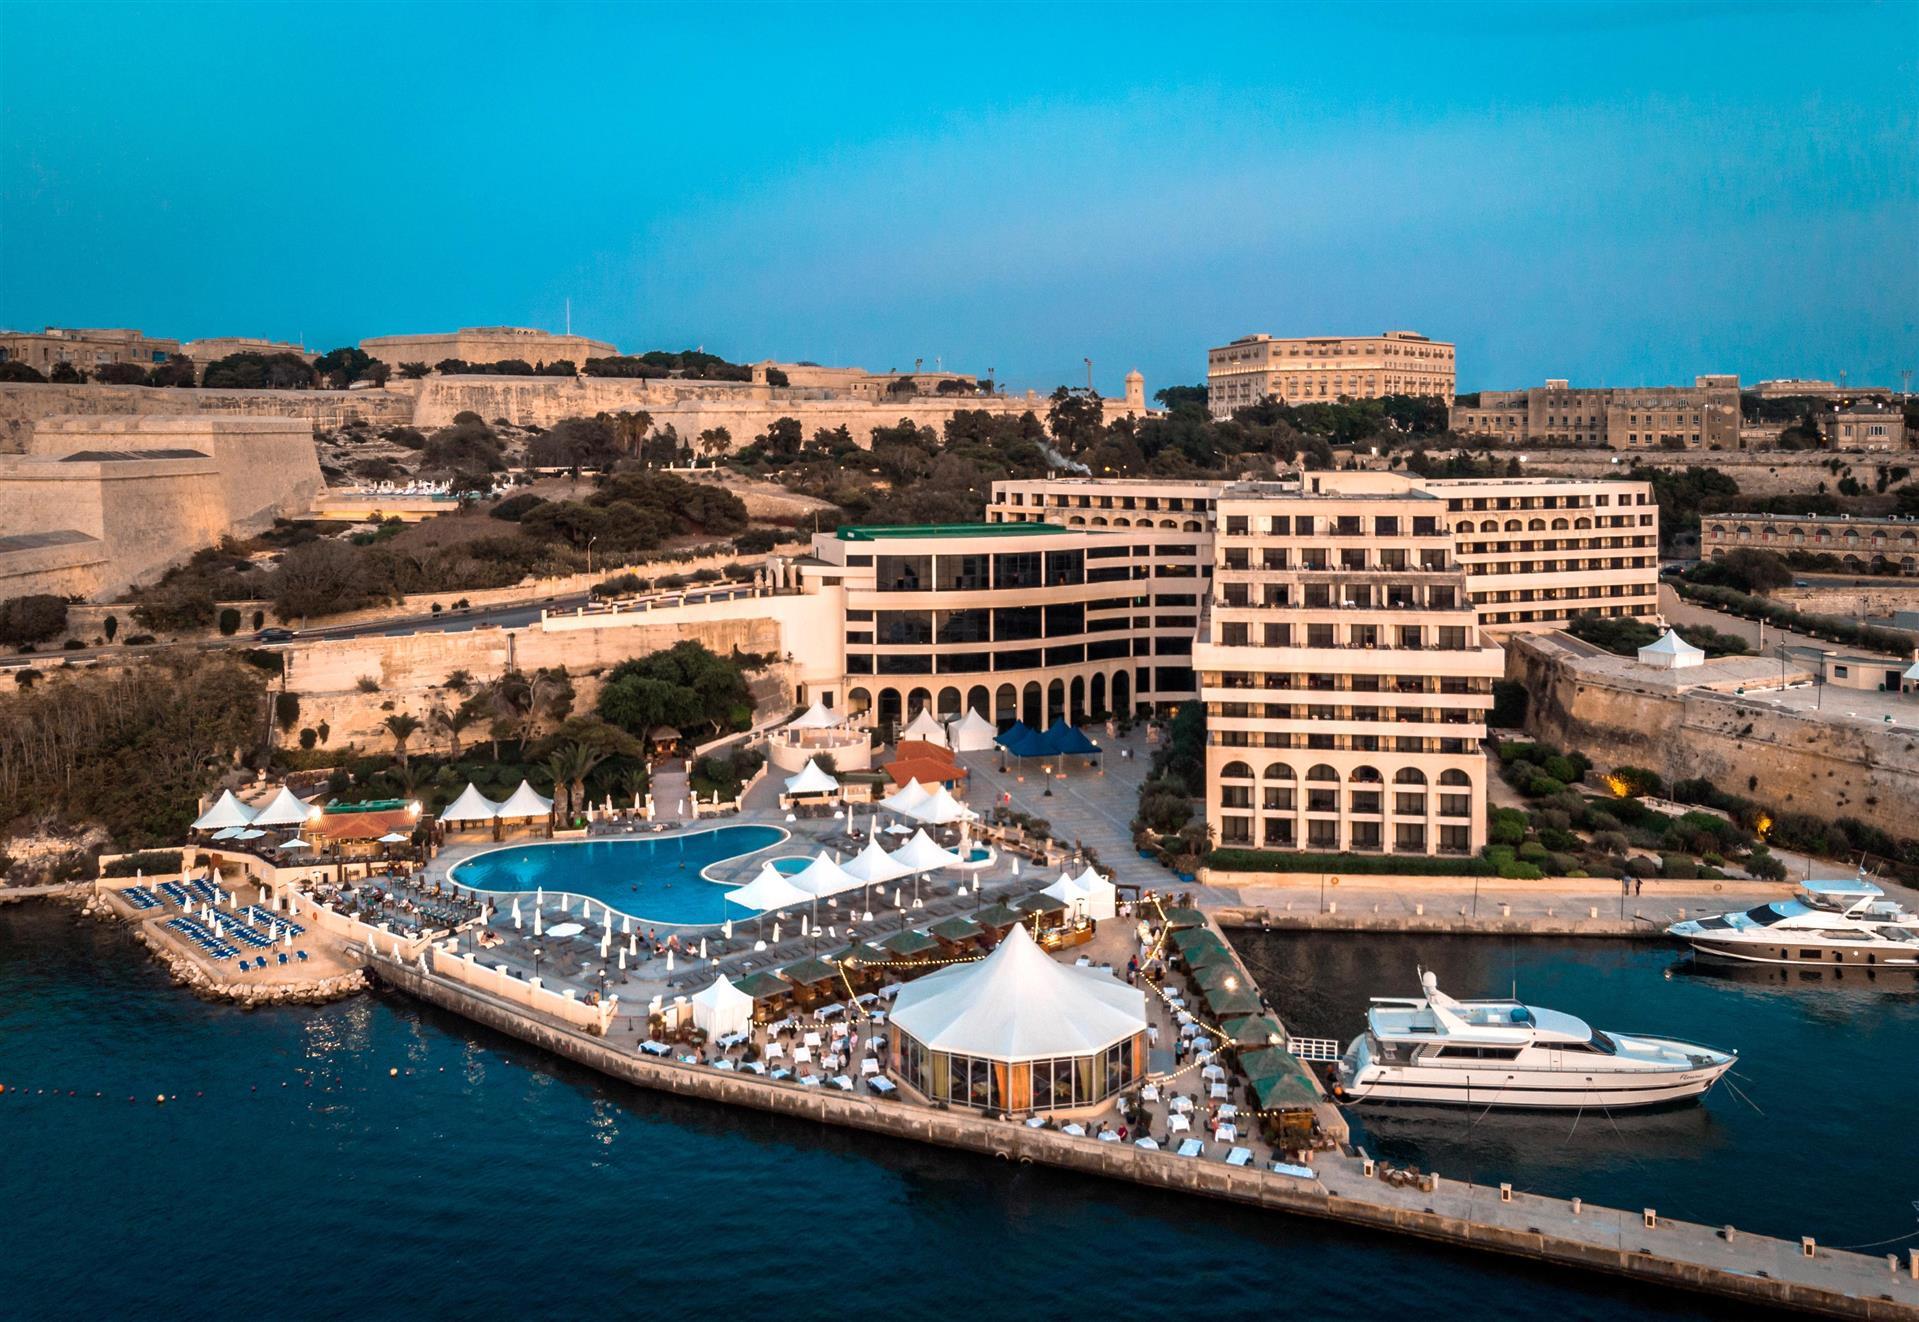 Grand Hotel Excelsior in Valletta, MT